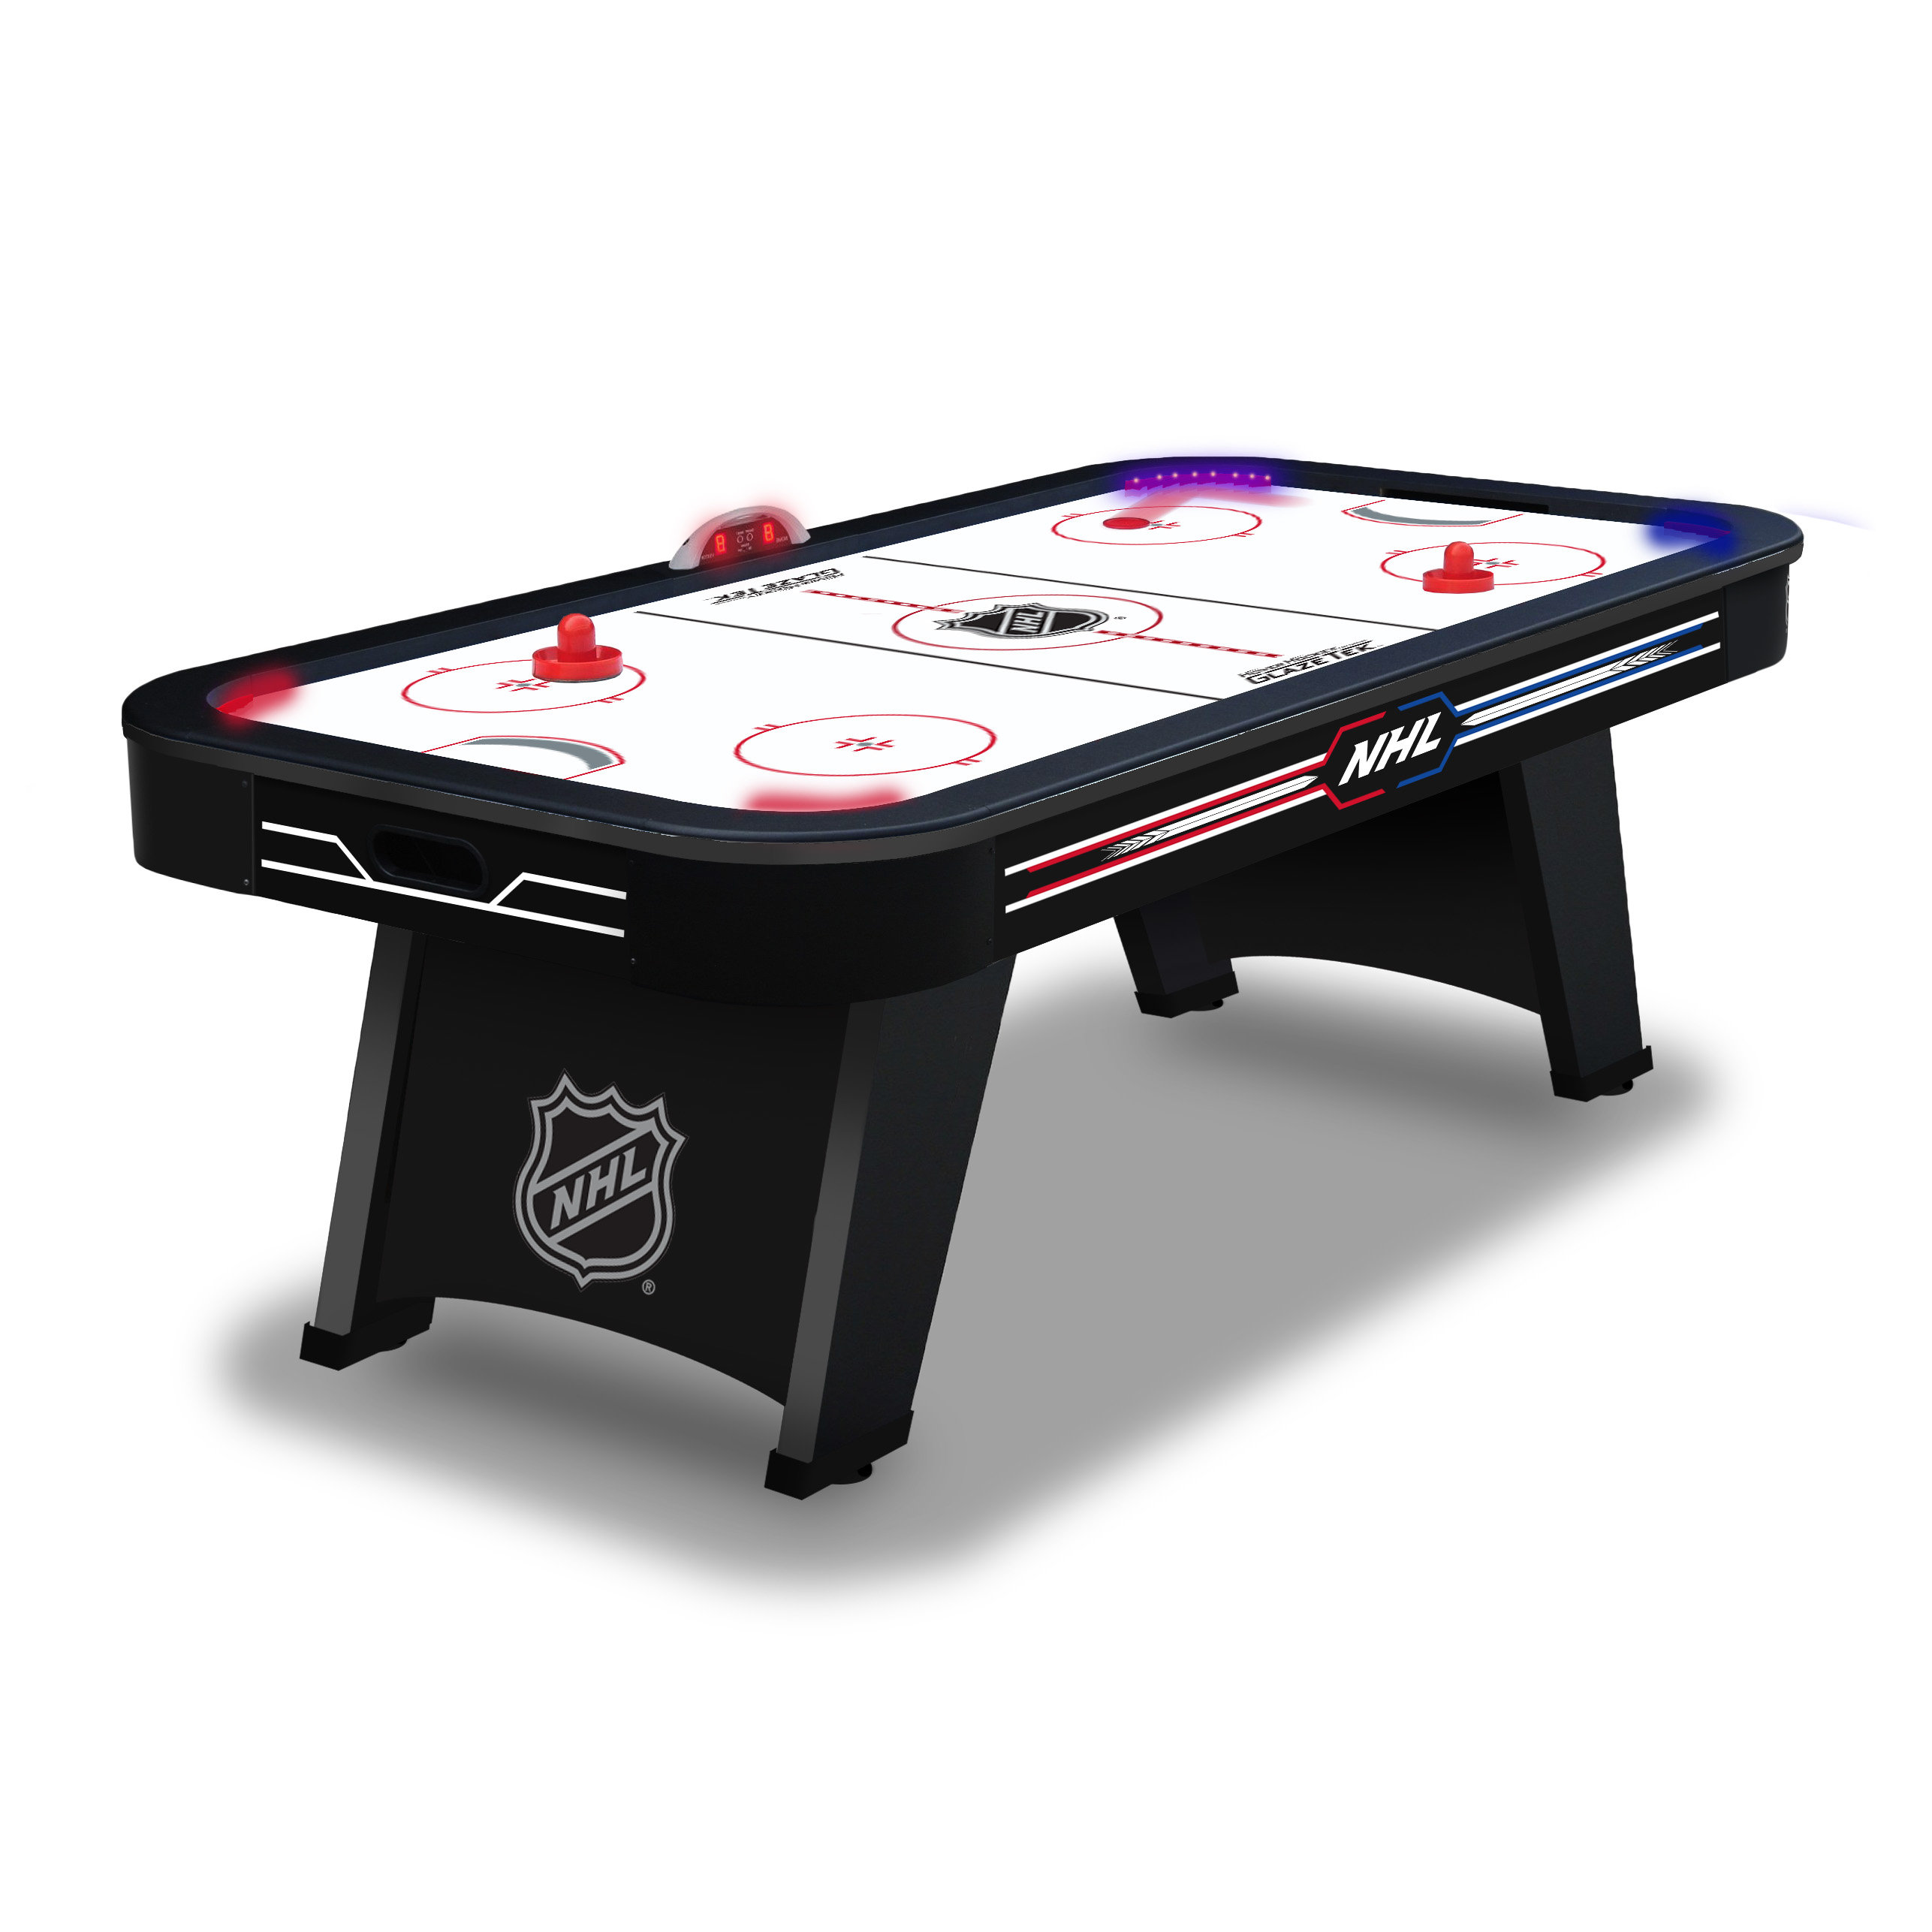 NHL 80 2 -Player Air Hockey Table with Digital Scoreboard